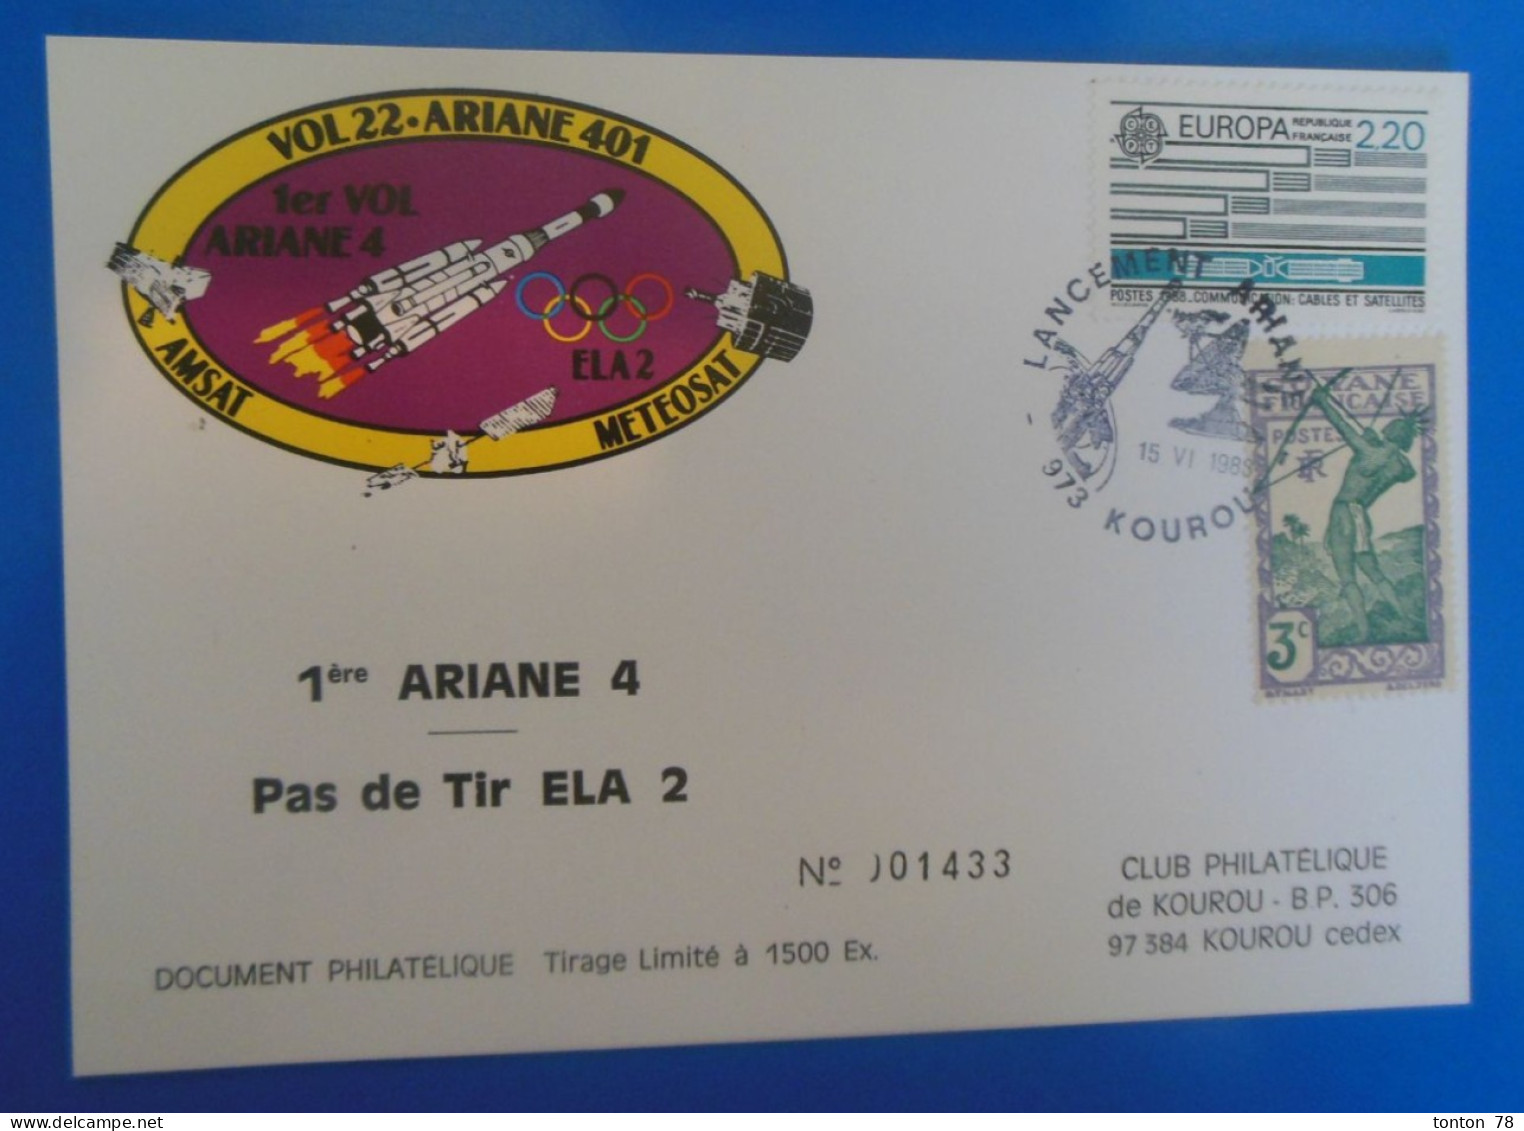 LANCEMENT DE LA FUSEE ARIANE DE KOUROU SUR CARTE DE 1988  -  1500 EX - Europa